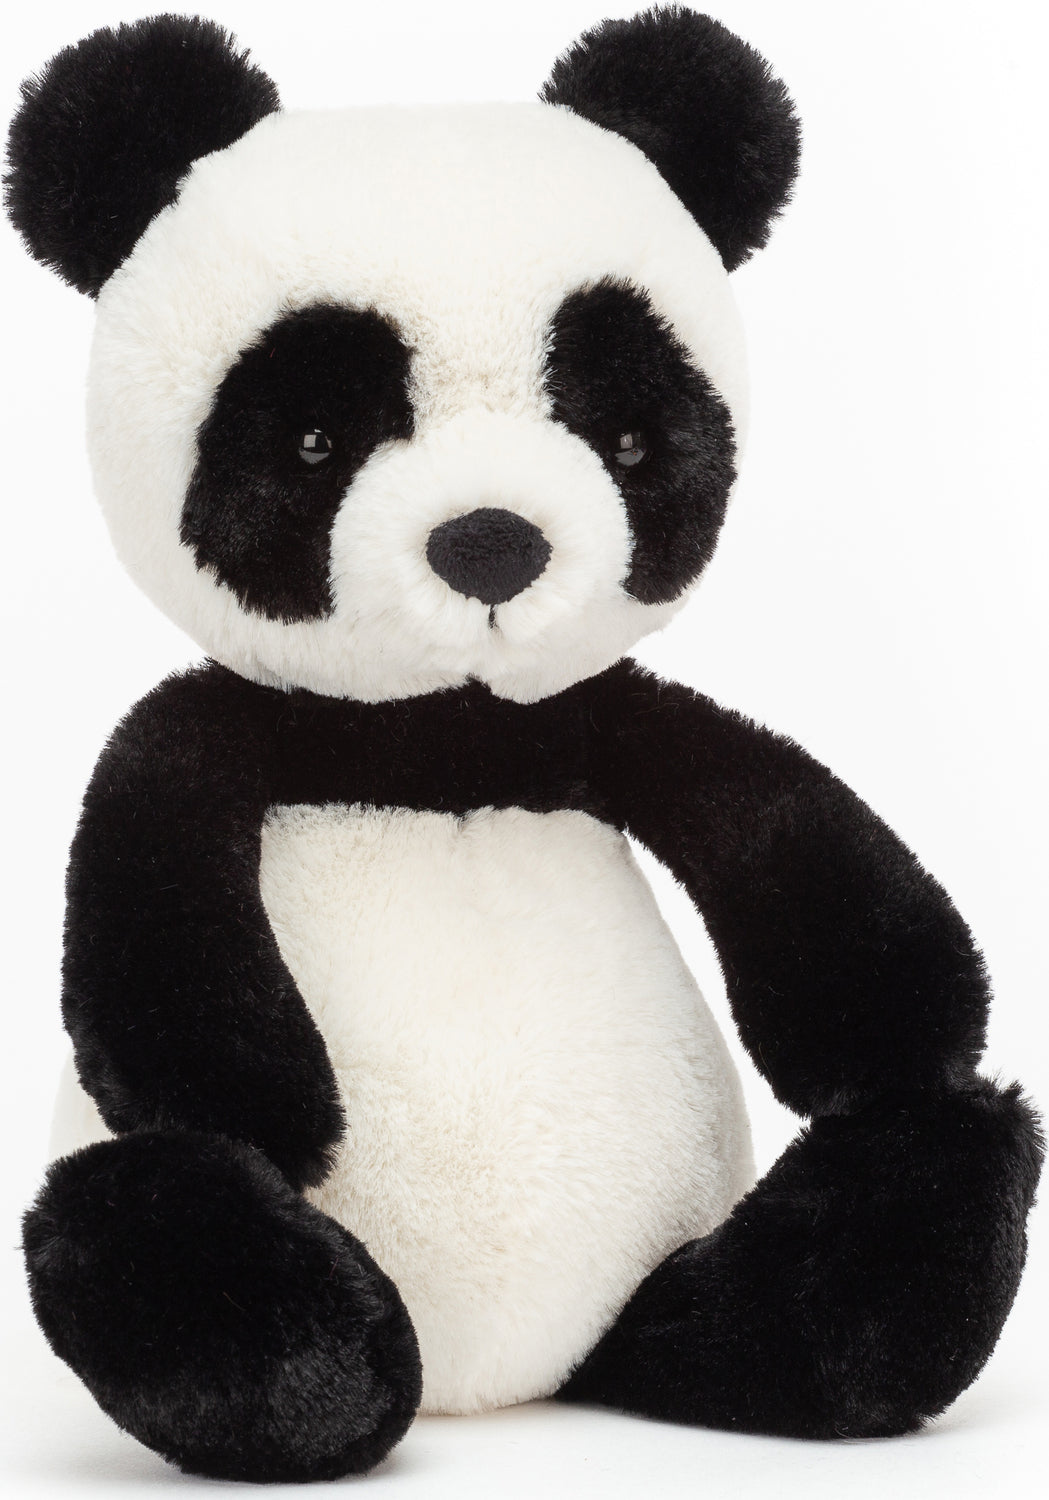 Jellycat Bas3pand Bashful Panda Medium